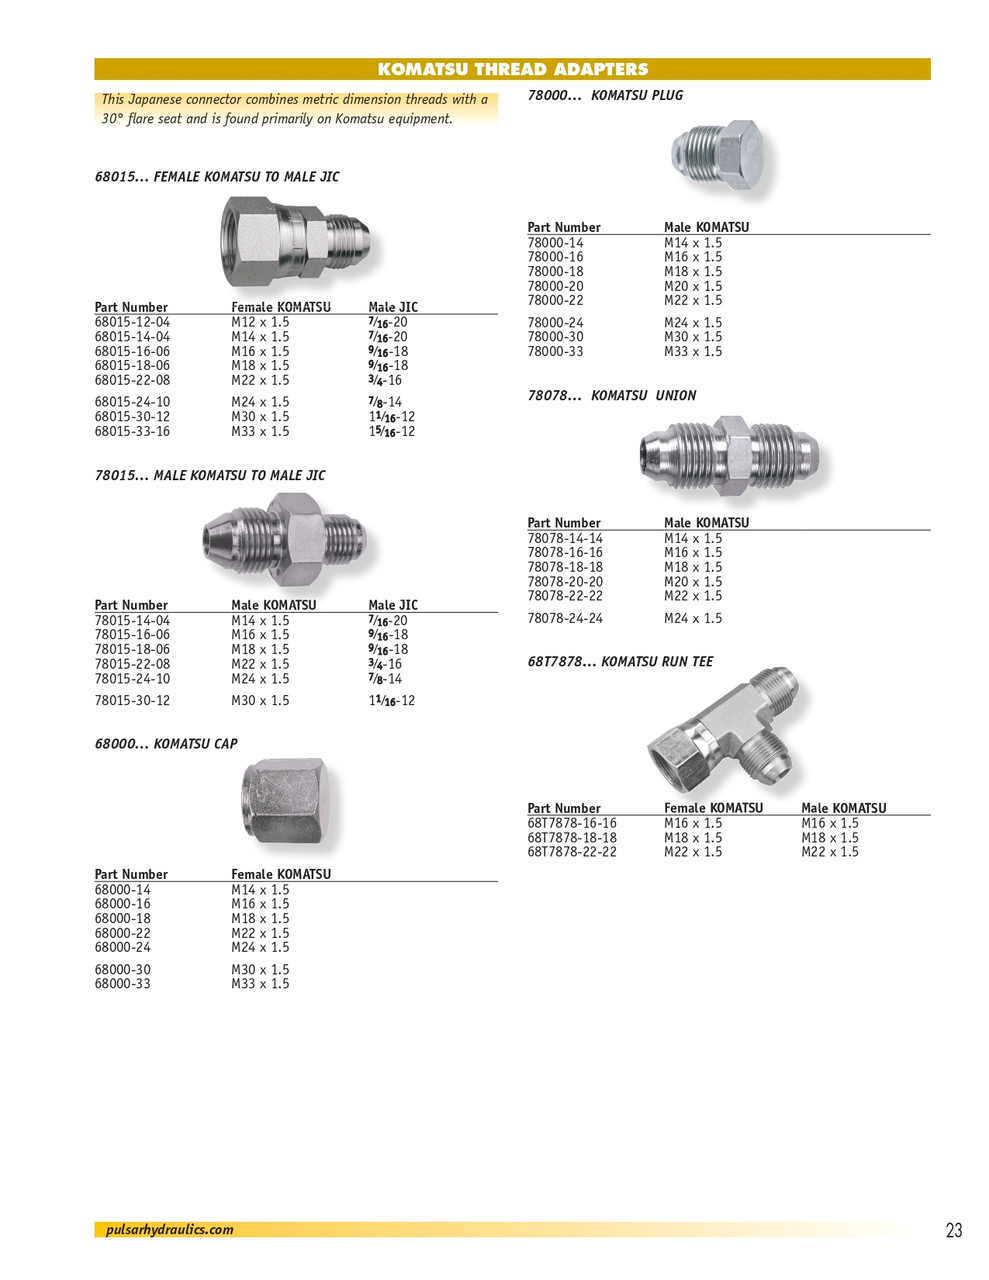 M22-1.5 Steel Komatsu Plug   78000-22